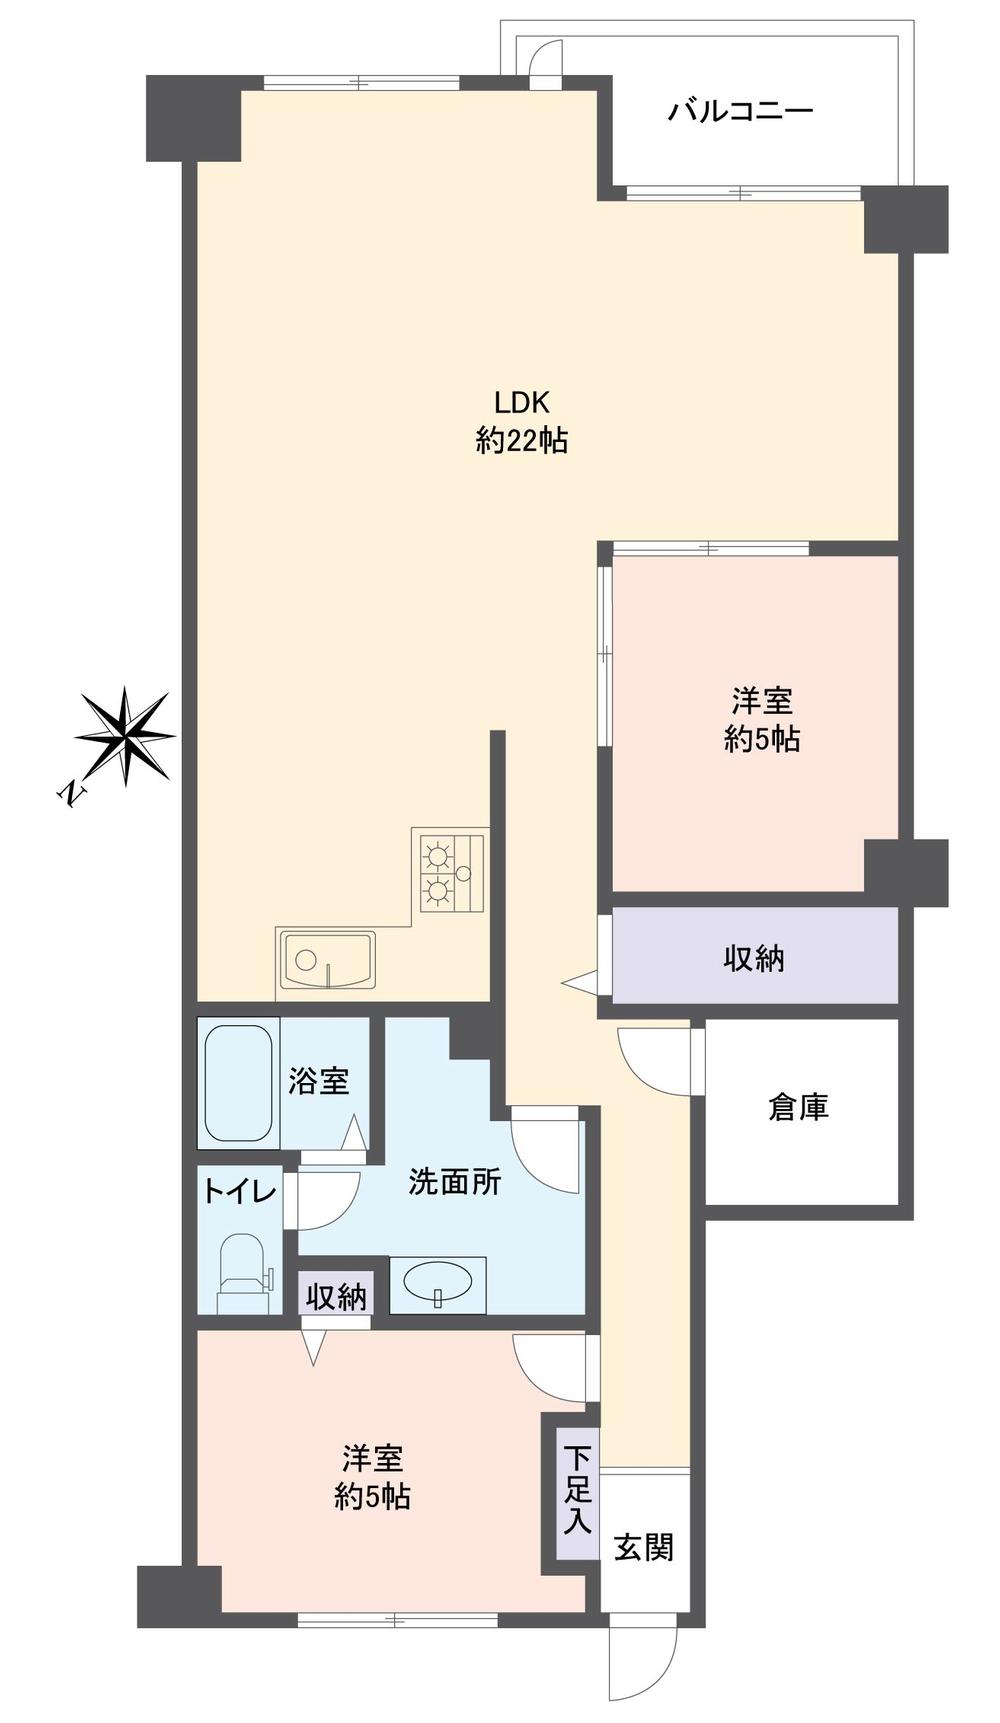 Floor plan. 2LDK + S (storeroom), Price 17.8 million yen, Occupied area 79.48 sq m , Balcony area 4.26 sq m